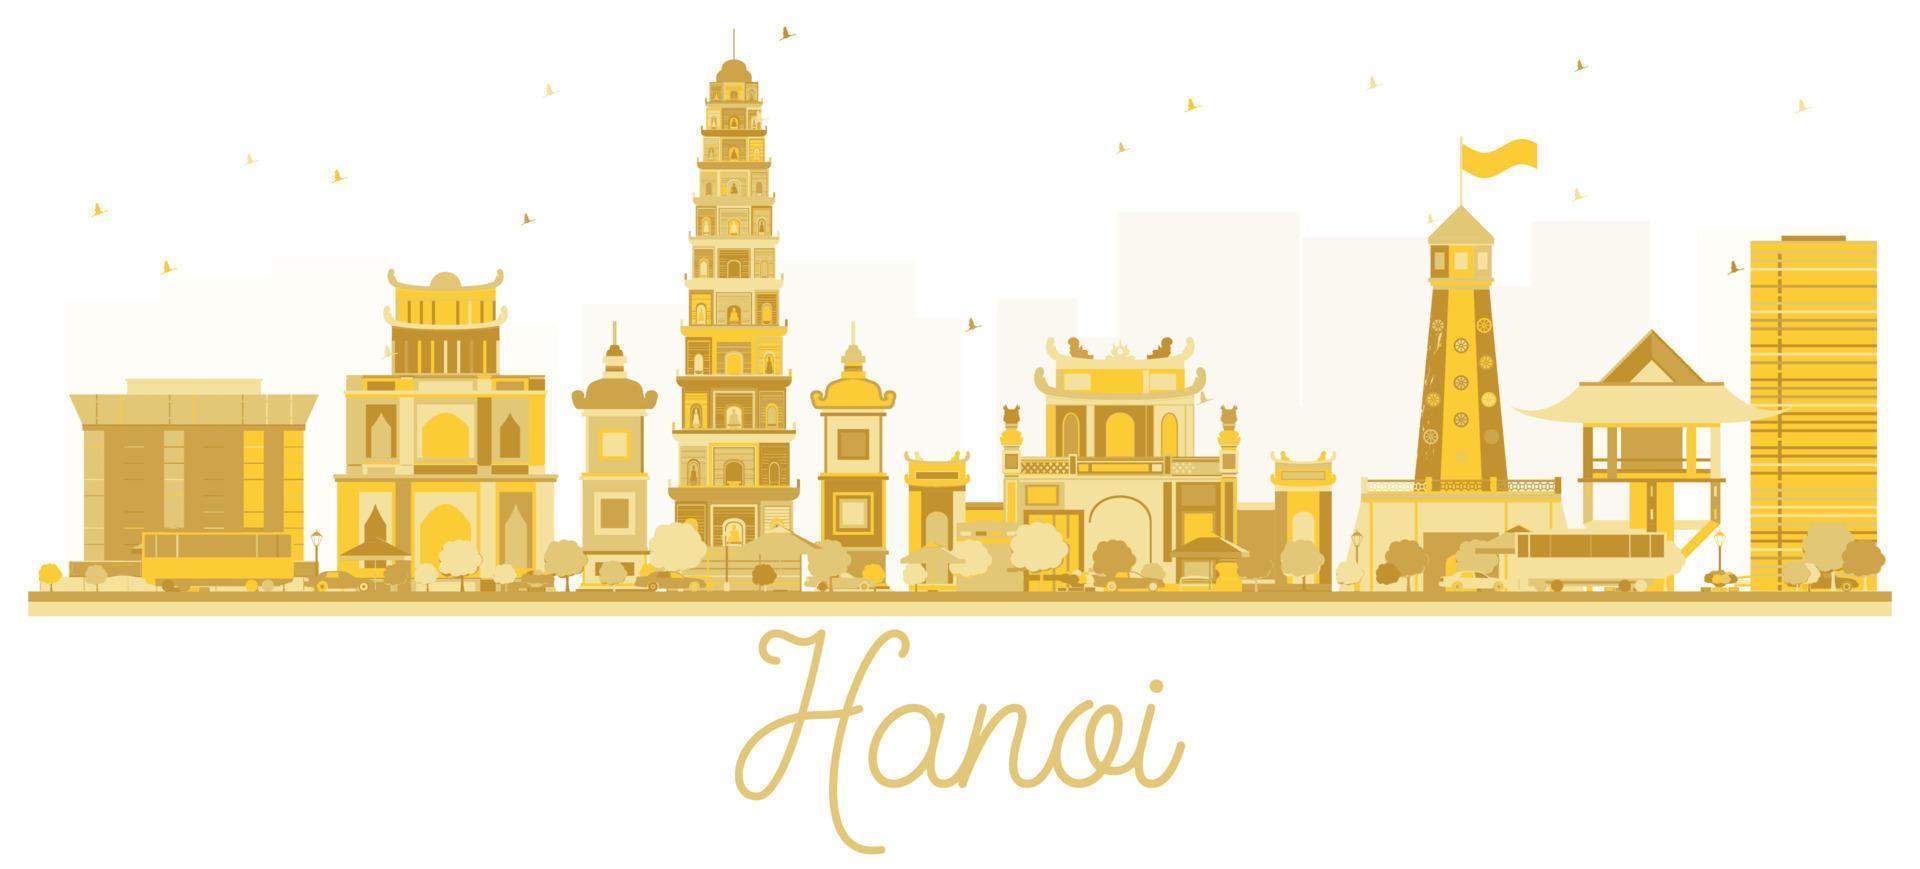 Hanoi stad skyline gouden silhouet. vector